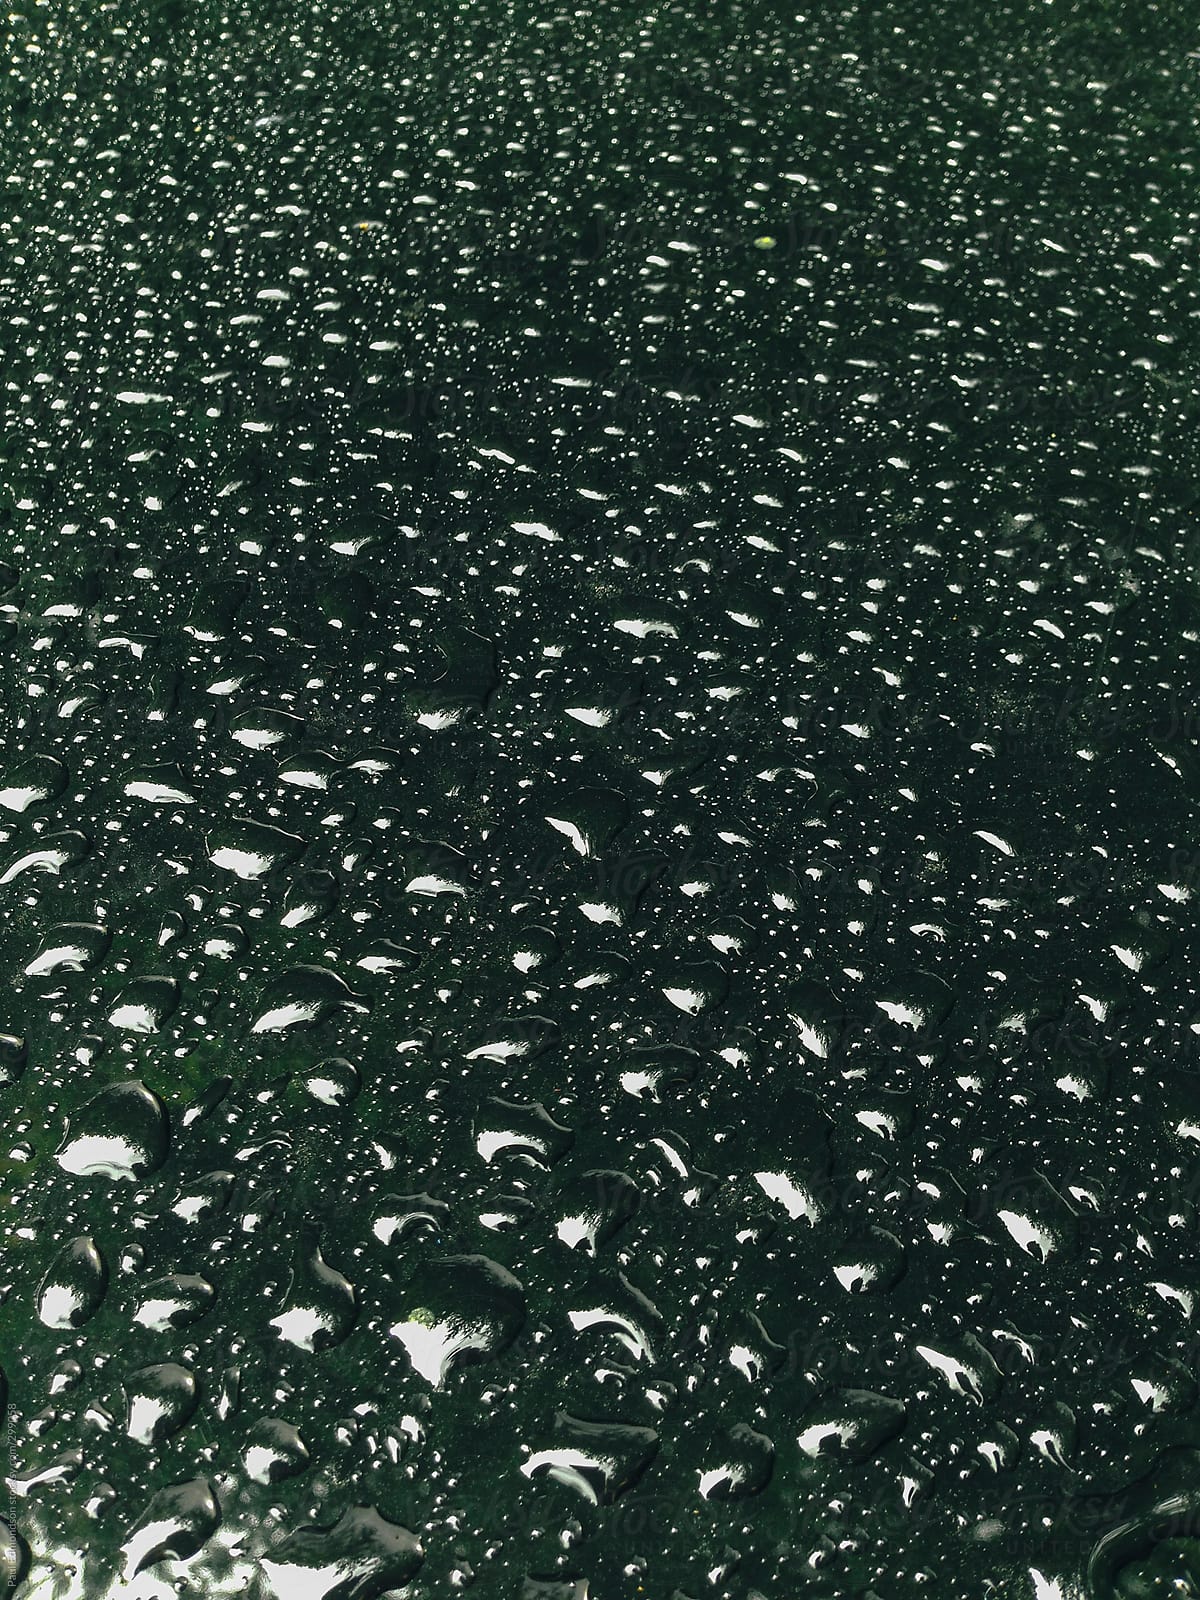 Water drops on hood of car, closeup